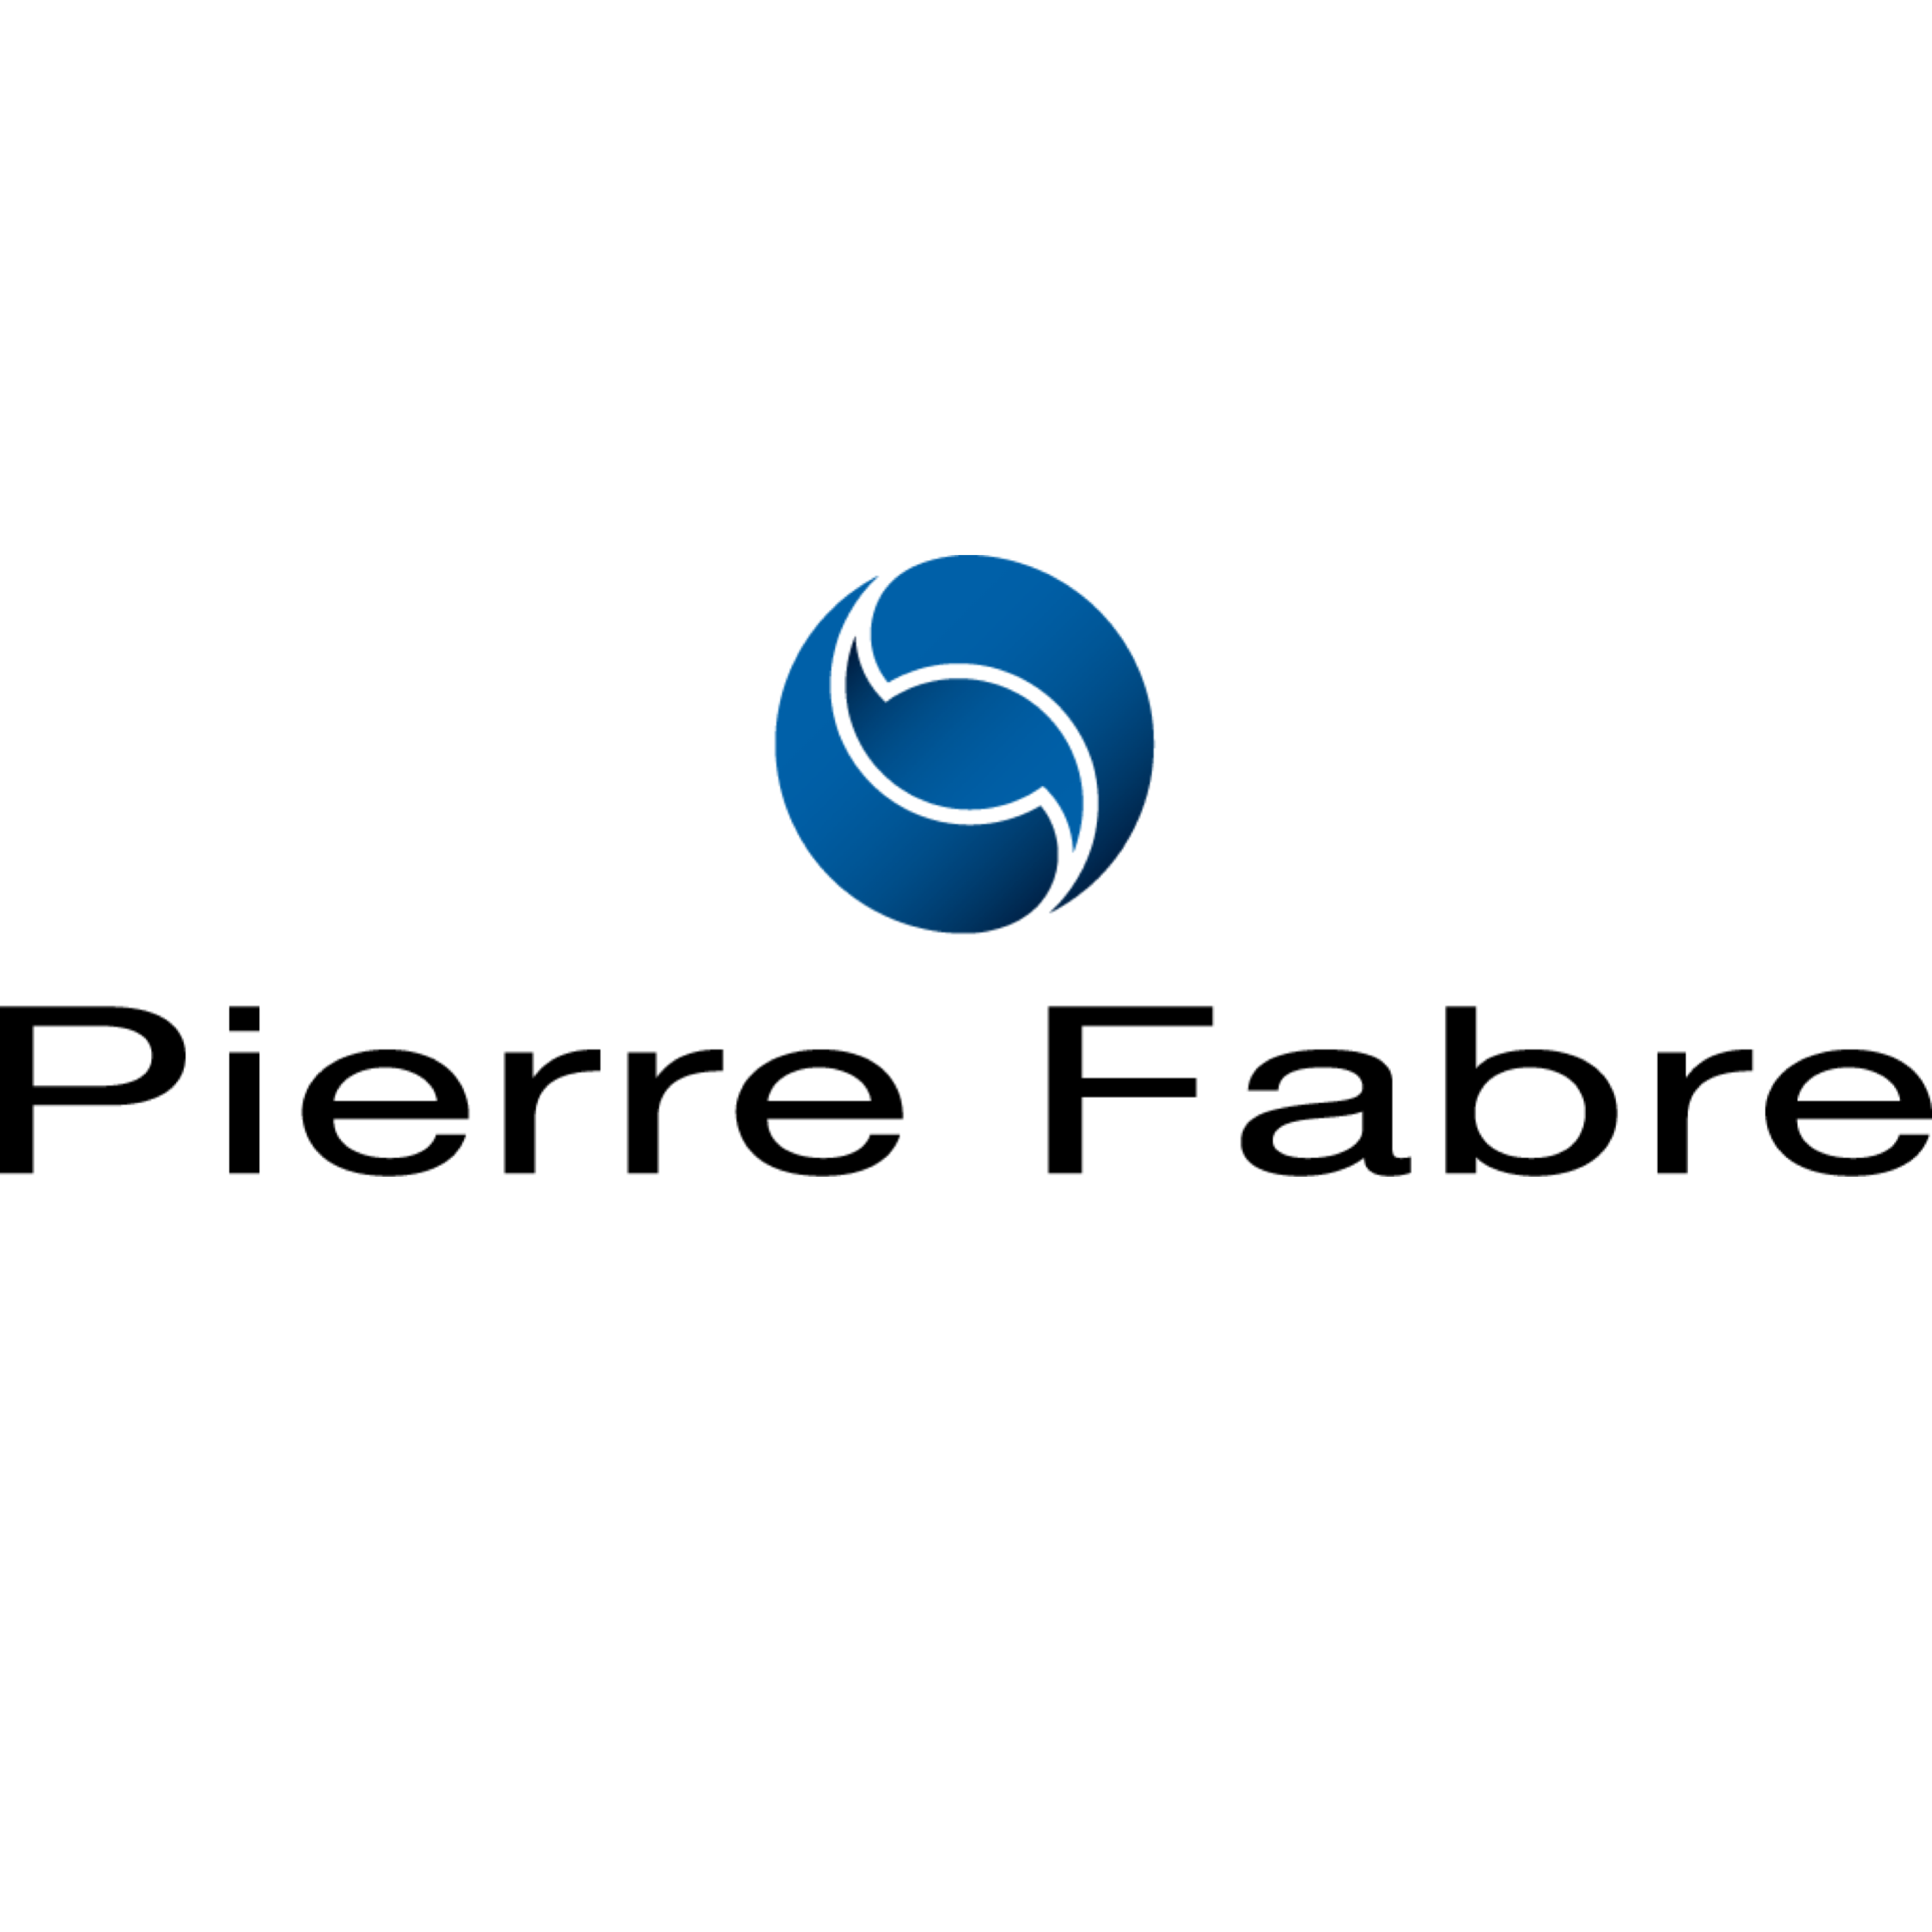 Pierre Fabre.png